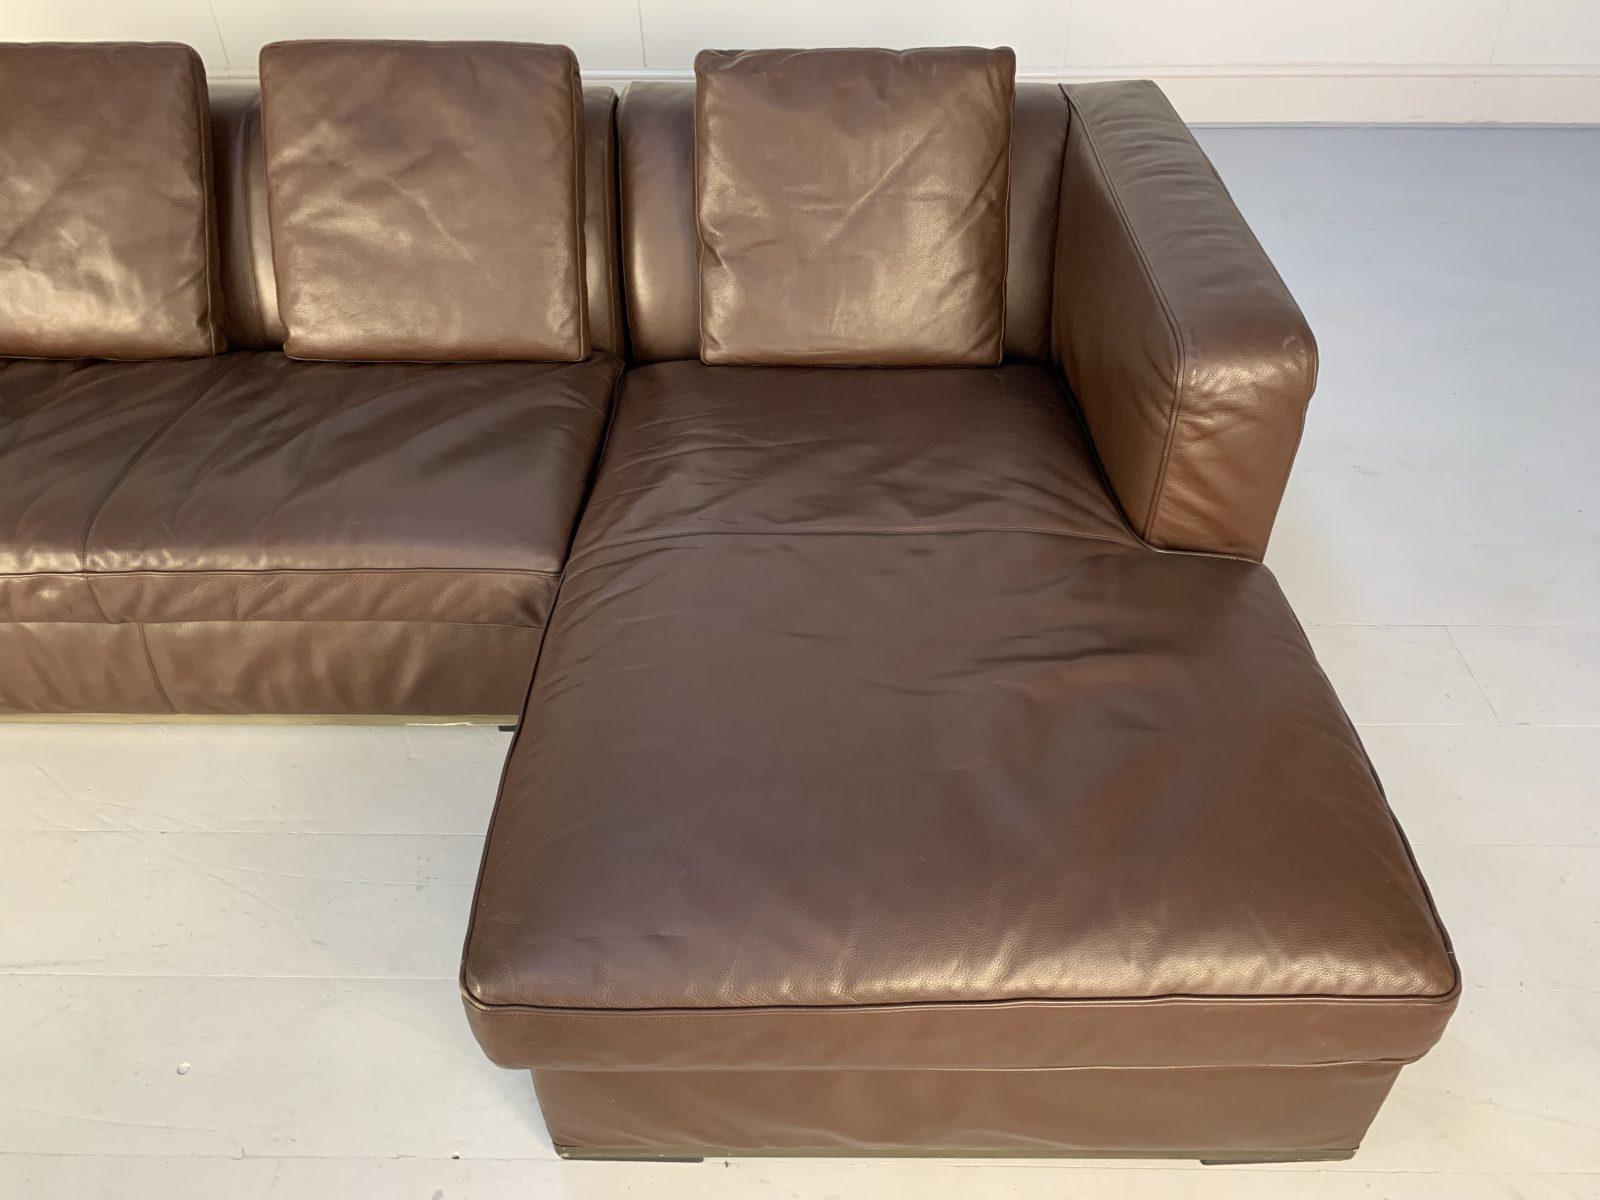 B&B Italia “Maxalto Apta” L-Shape Sofa – in Brown “Gamma” Leather For Sale 2